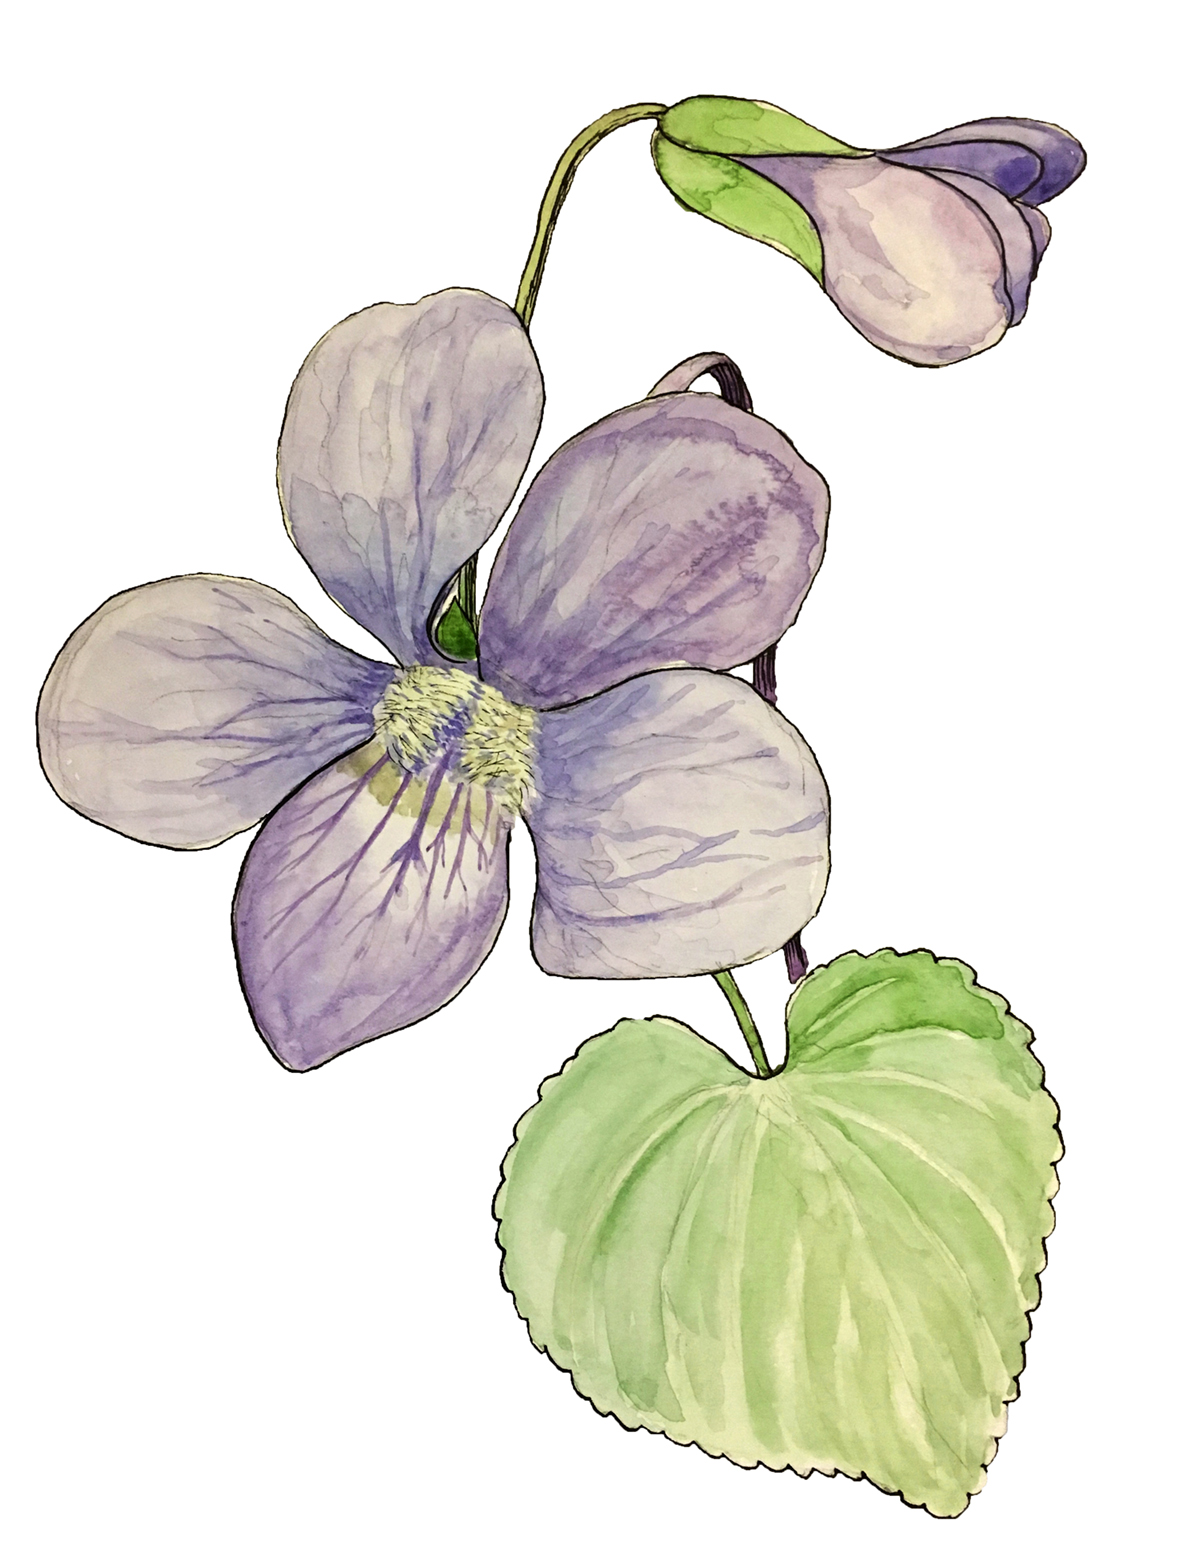 In Bloom: Common Blue Violet